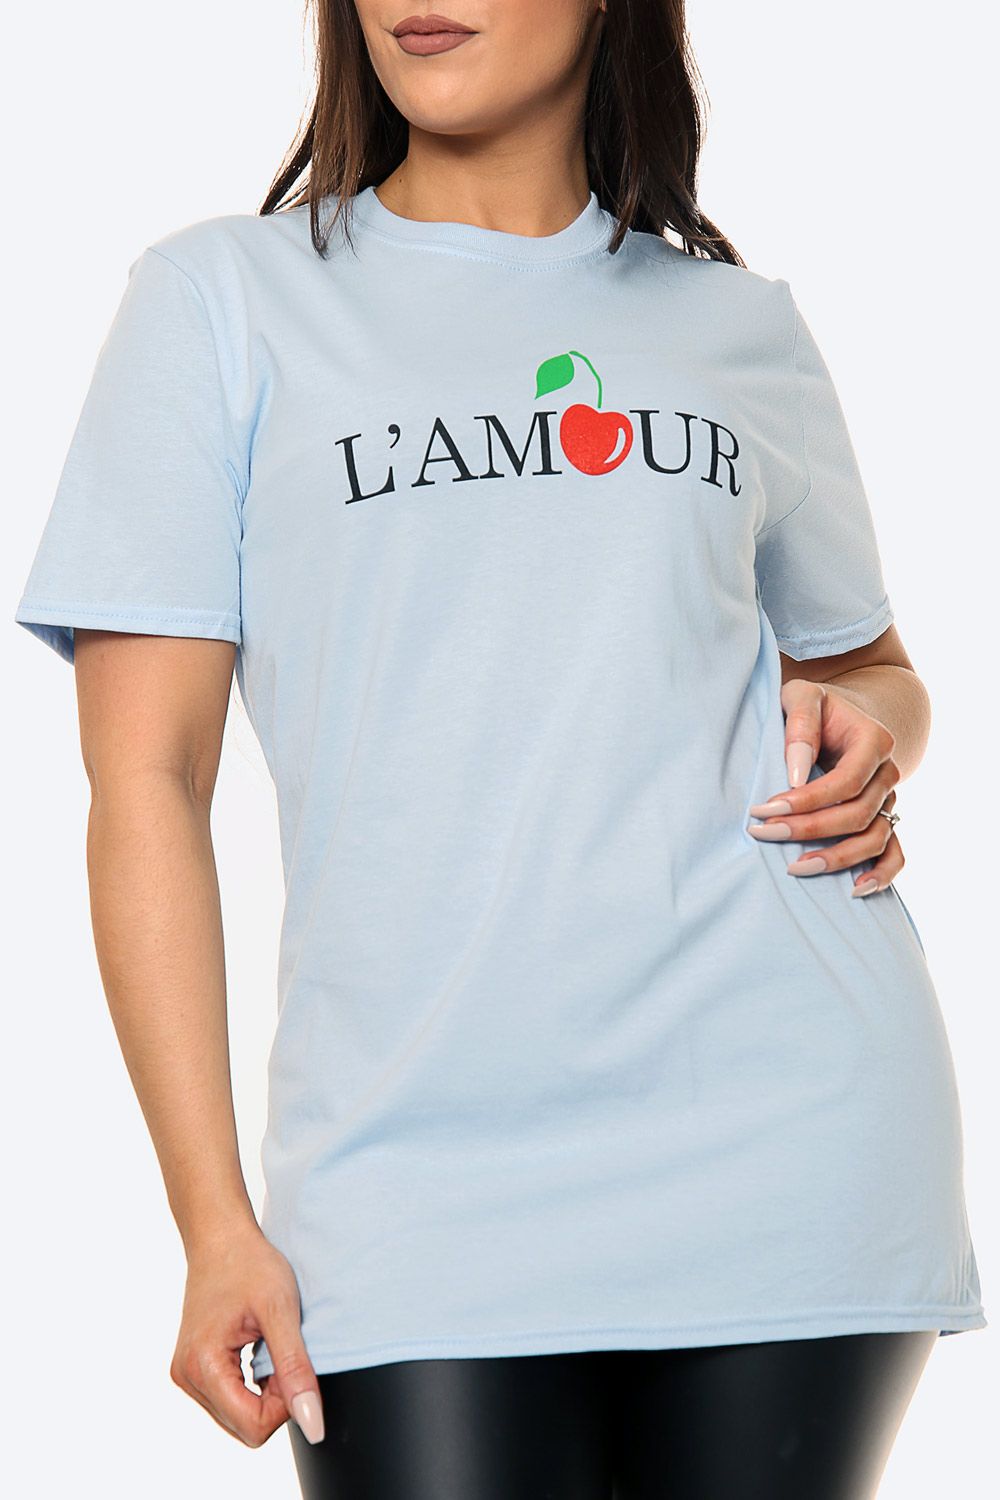 L'AMOUR Cherry Print Oversized T-Shirt